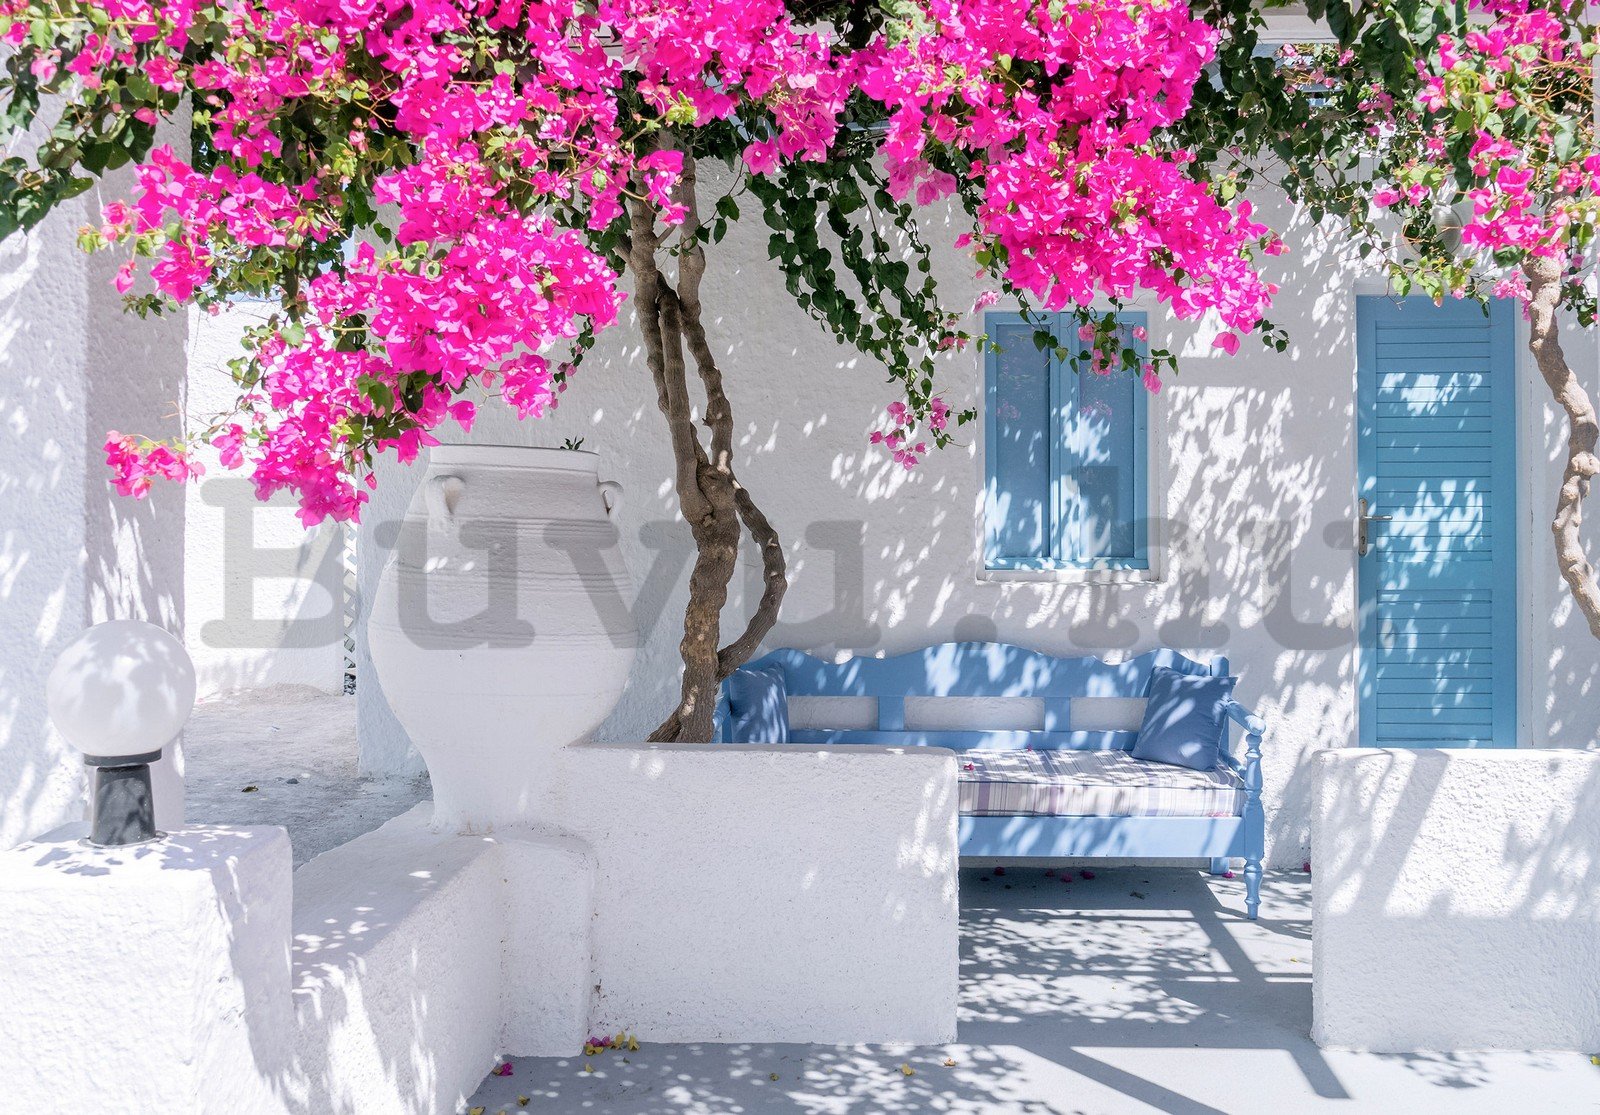 Vlies fotótapéta: Görög utcai virágok (2) - 368x254 cm